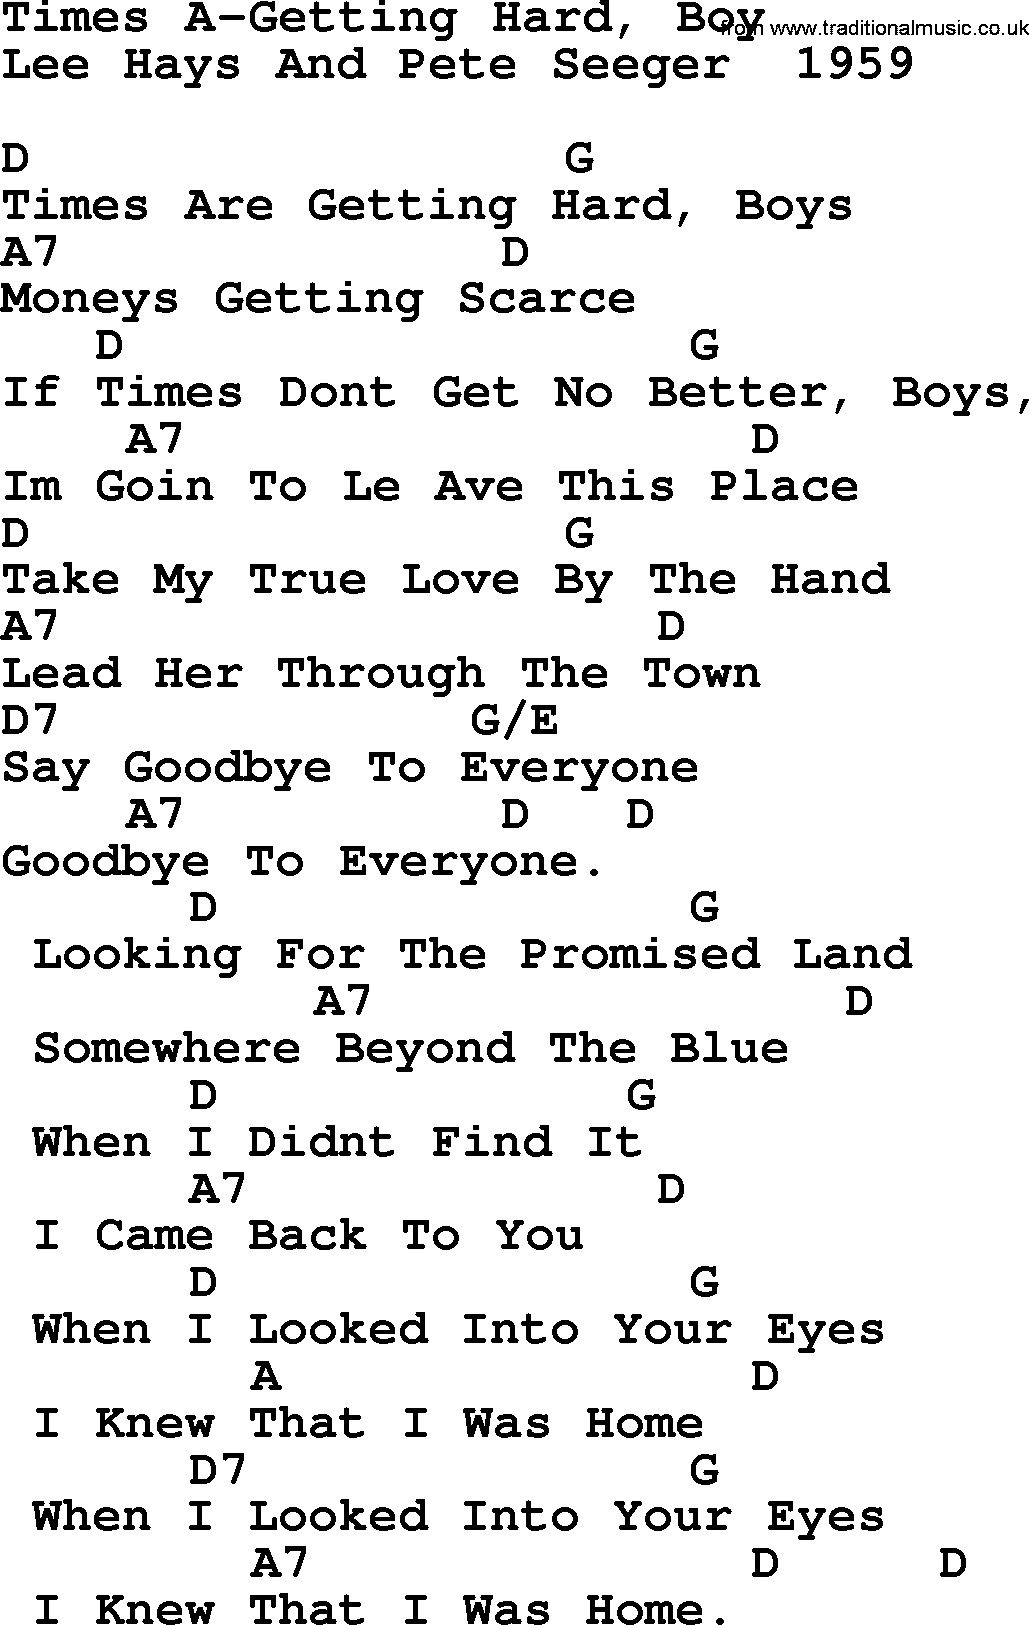 Pete Seeger song Times A Getting Hard-Pete-Seeger.txt lyrics